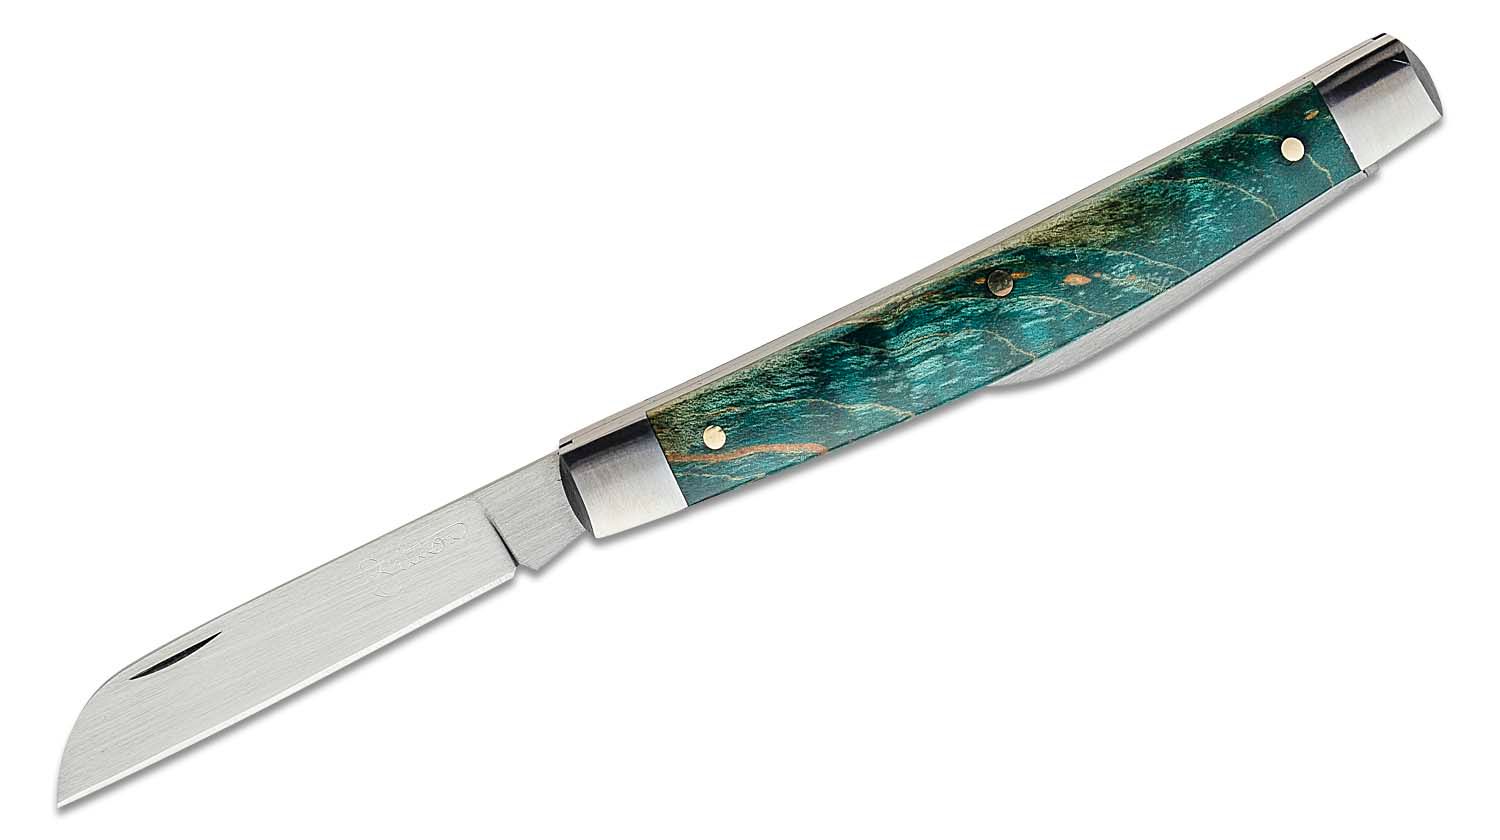 Takiup Ceramic Knife Set Review 2019